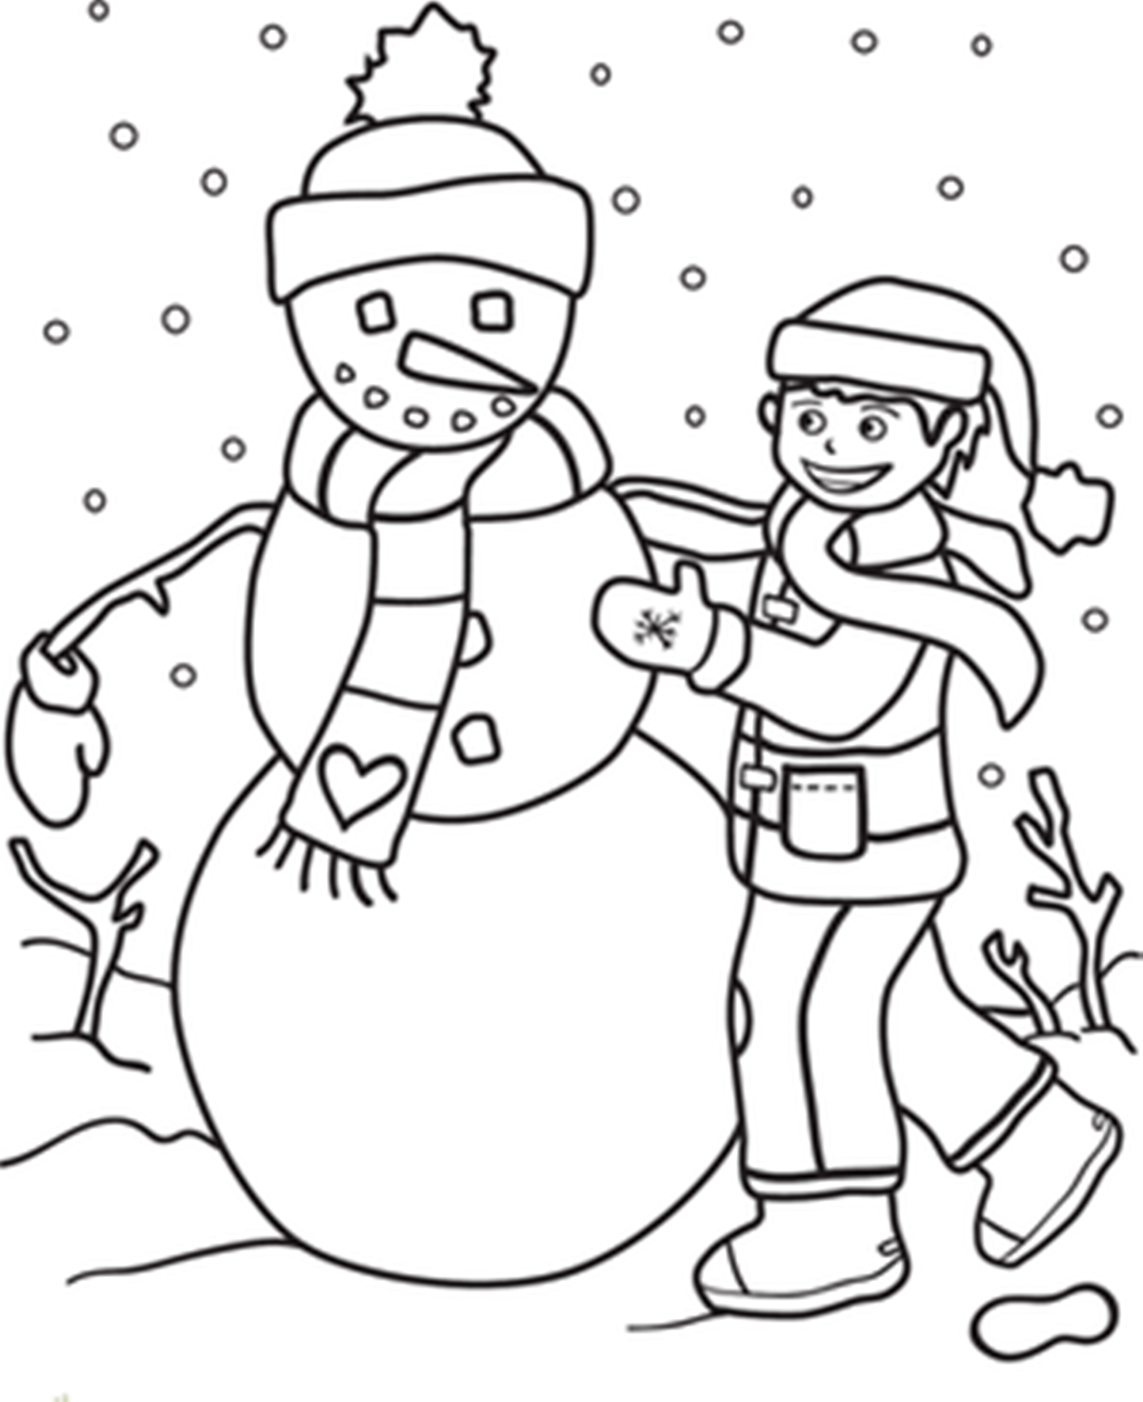 A Boy Making Snowman S To Print 4de6 Coloring Page